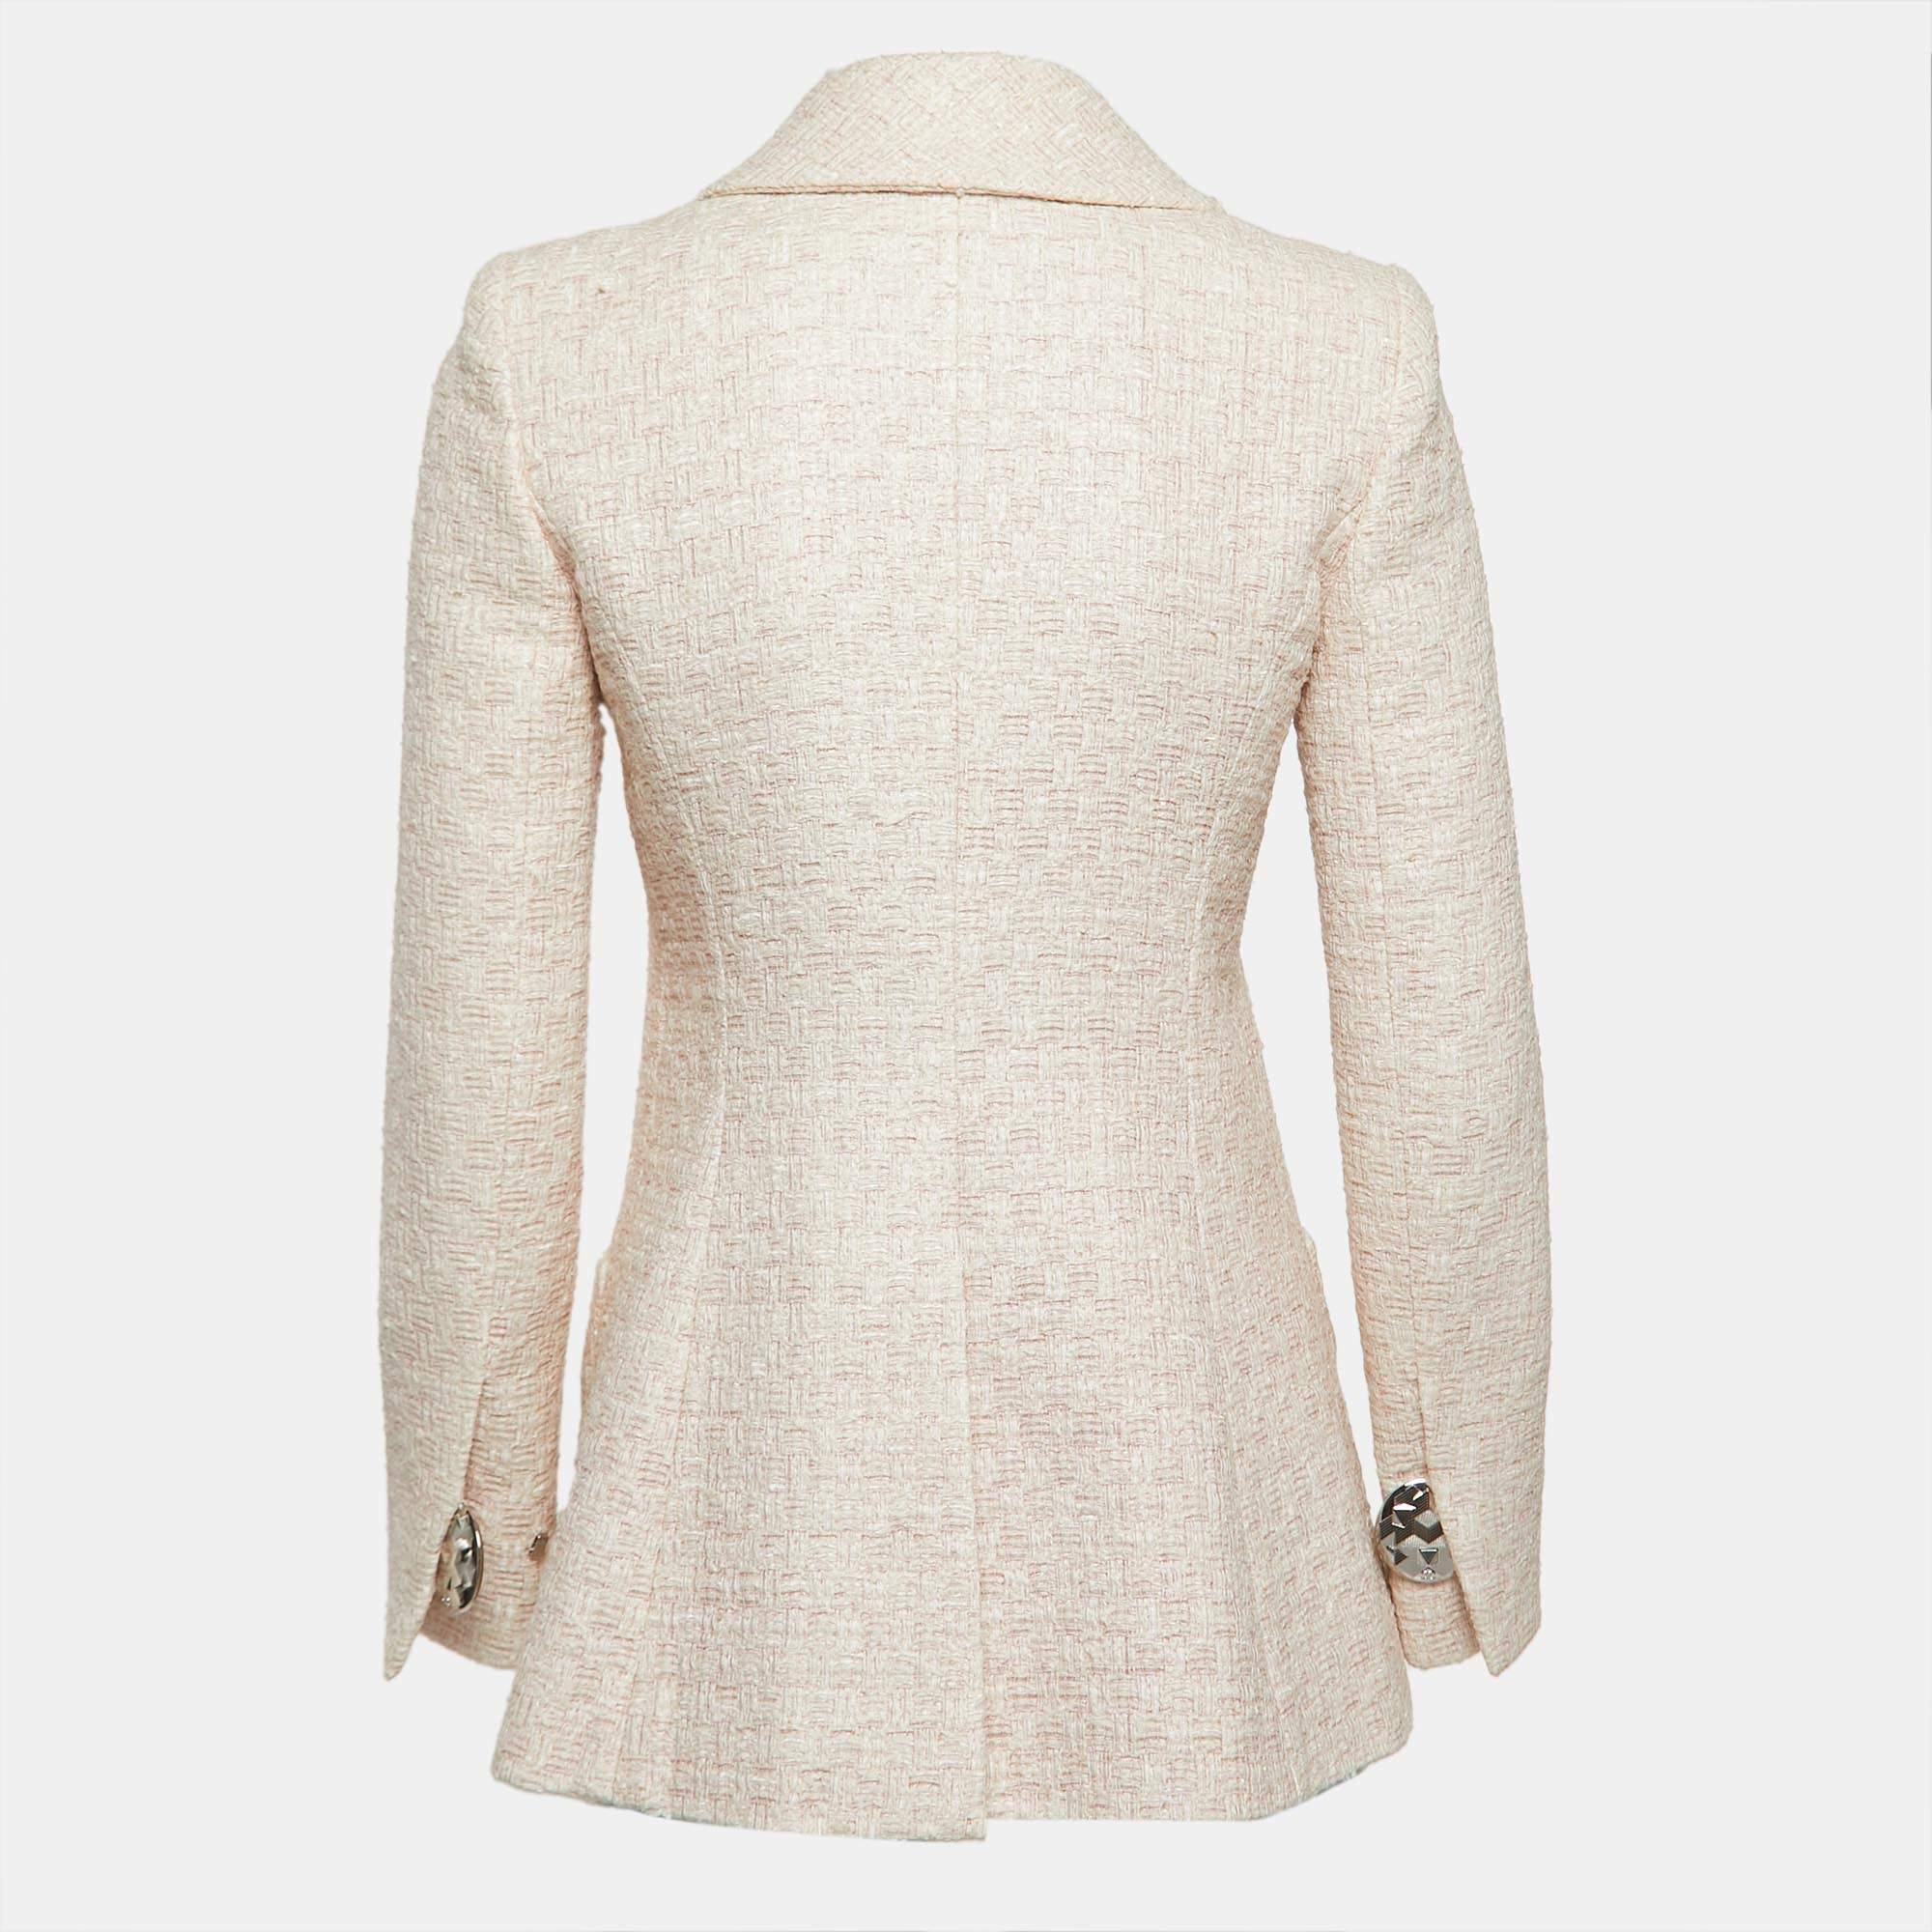 Chanel Pink Lurex Tweed Collared Tailored Jacket S 1